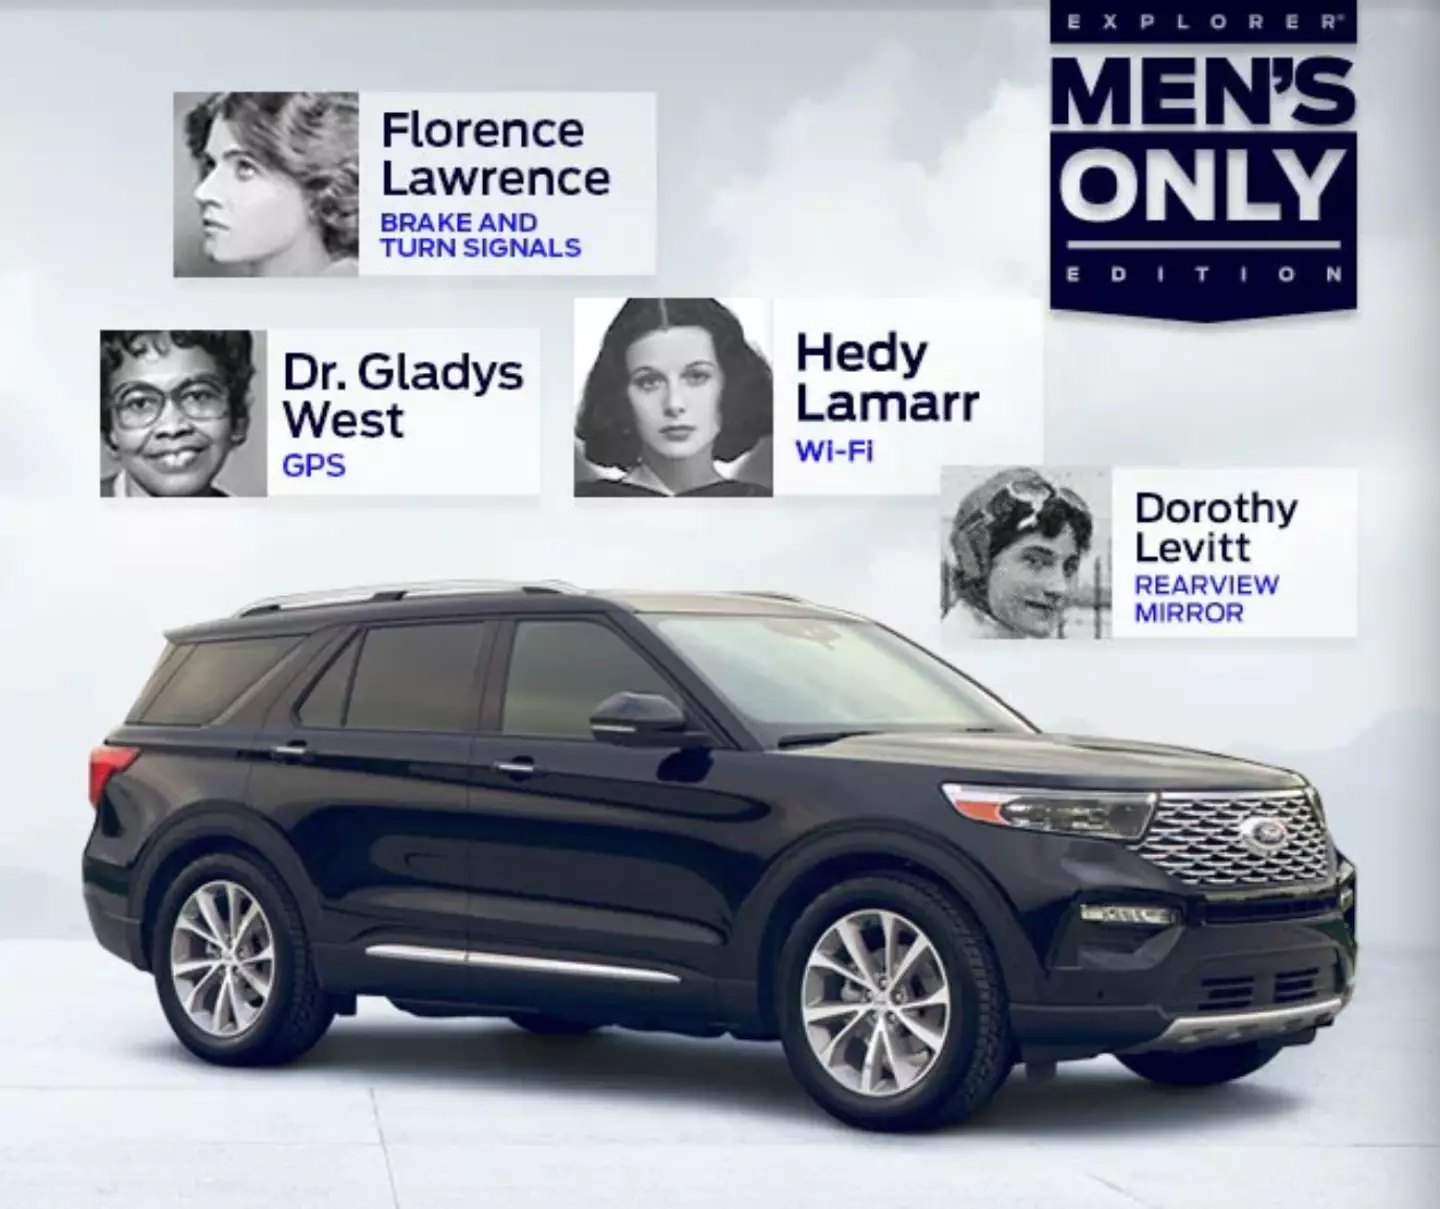 Ford praised for launching 'men's only car' on International Women's Day